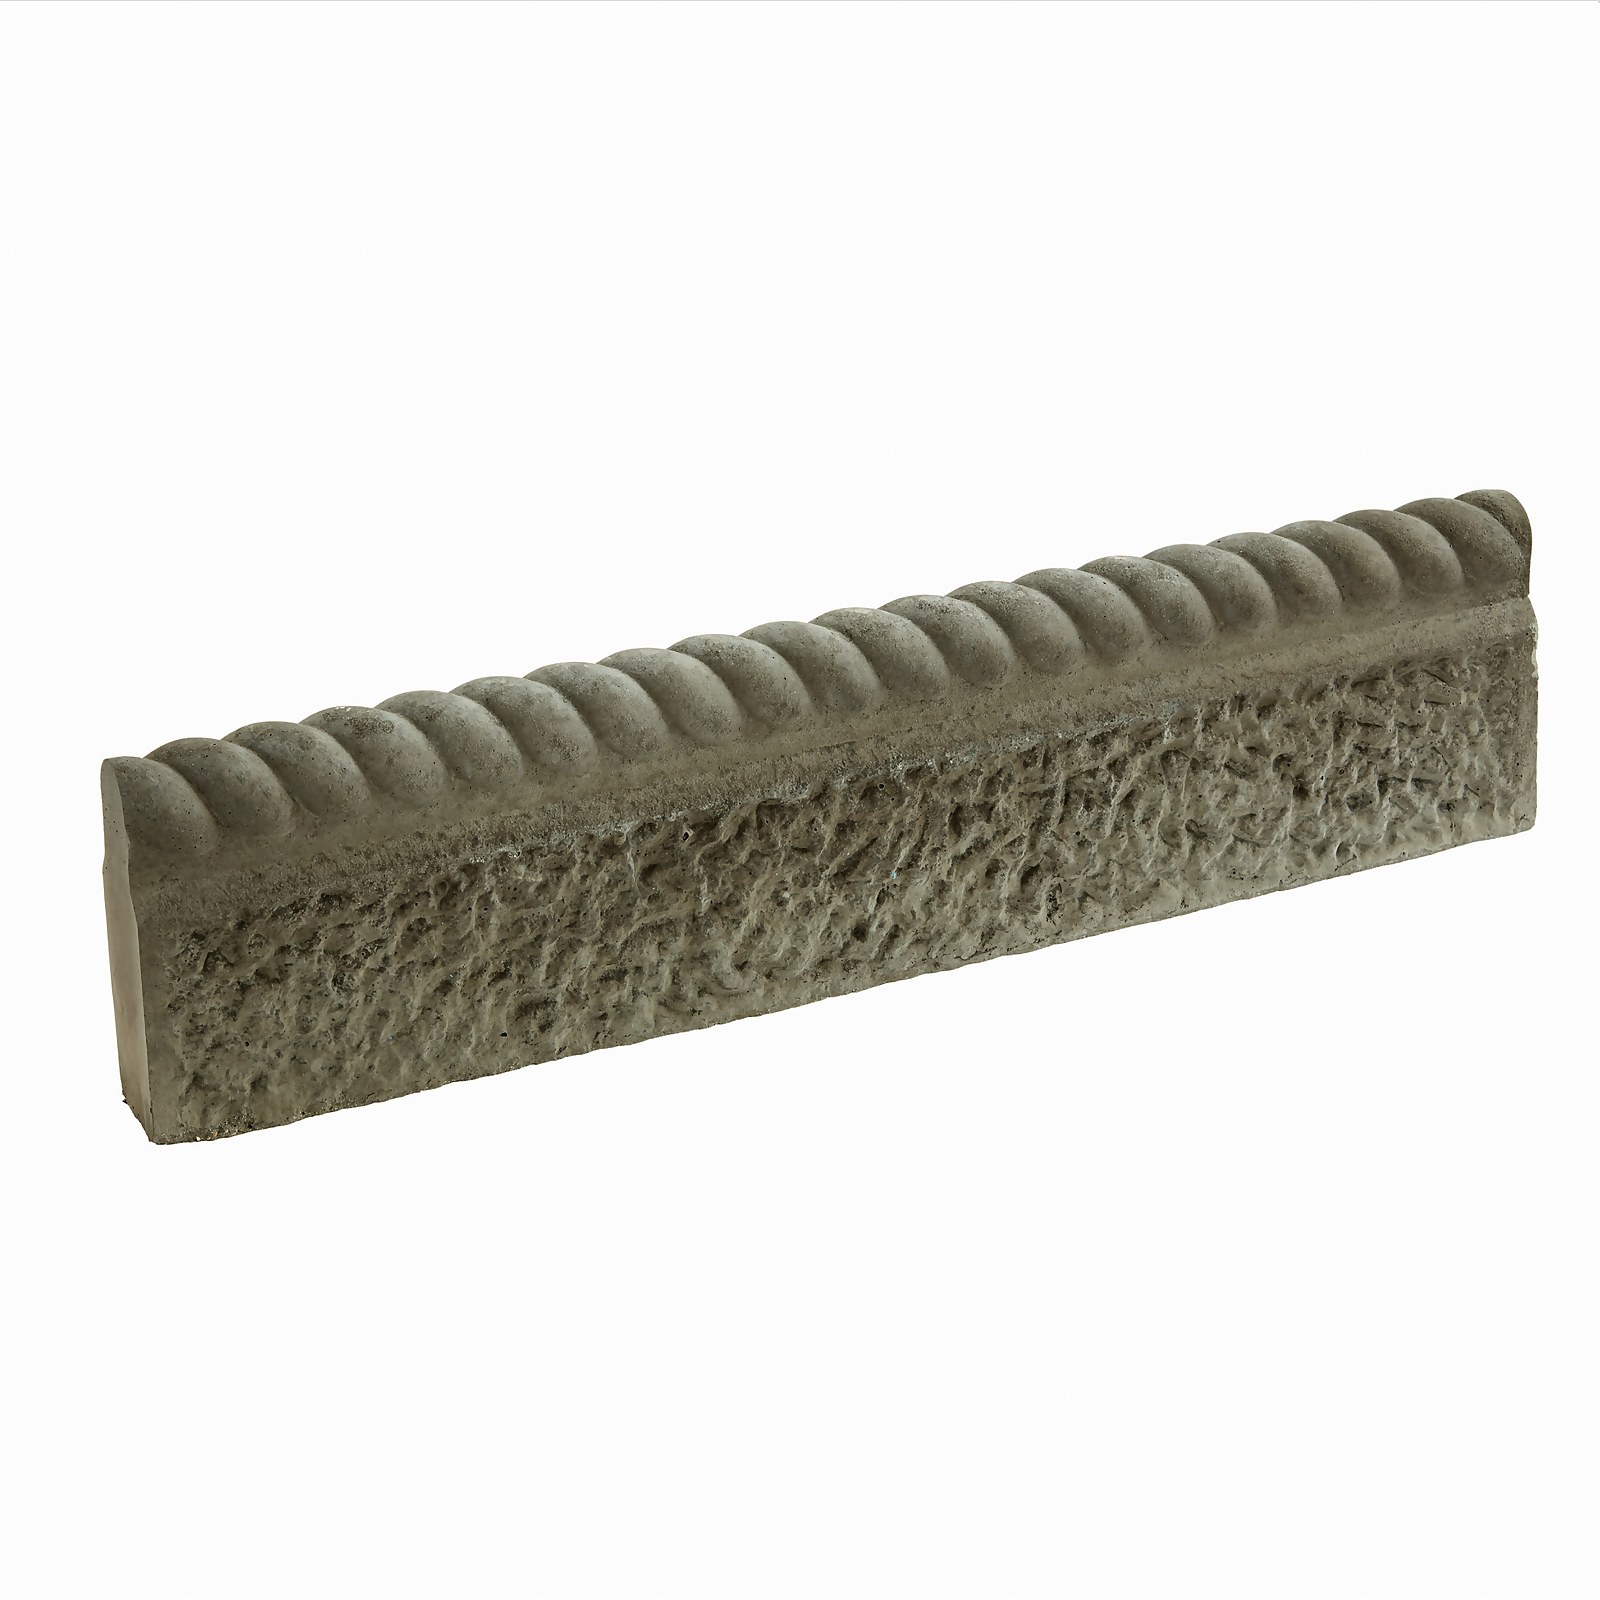 Photo of Stylish Stone Rustic Full Rope Top Edging - Old Granite -full Pack-